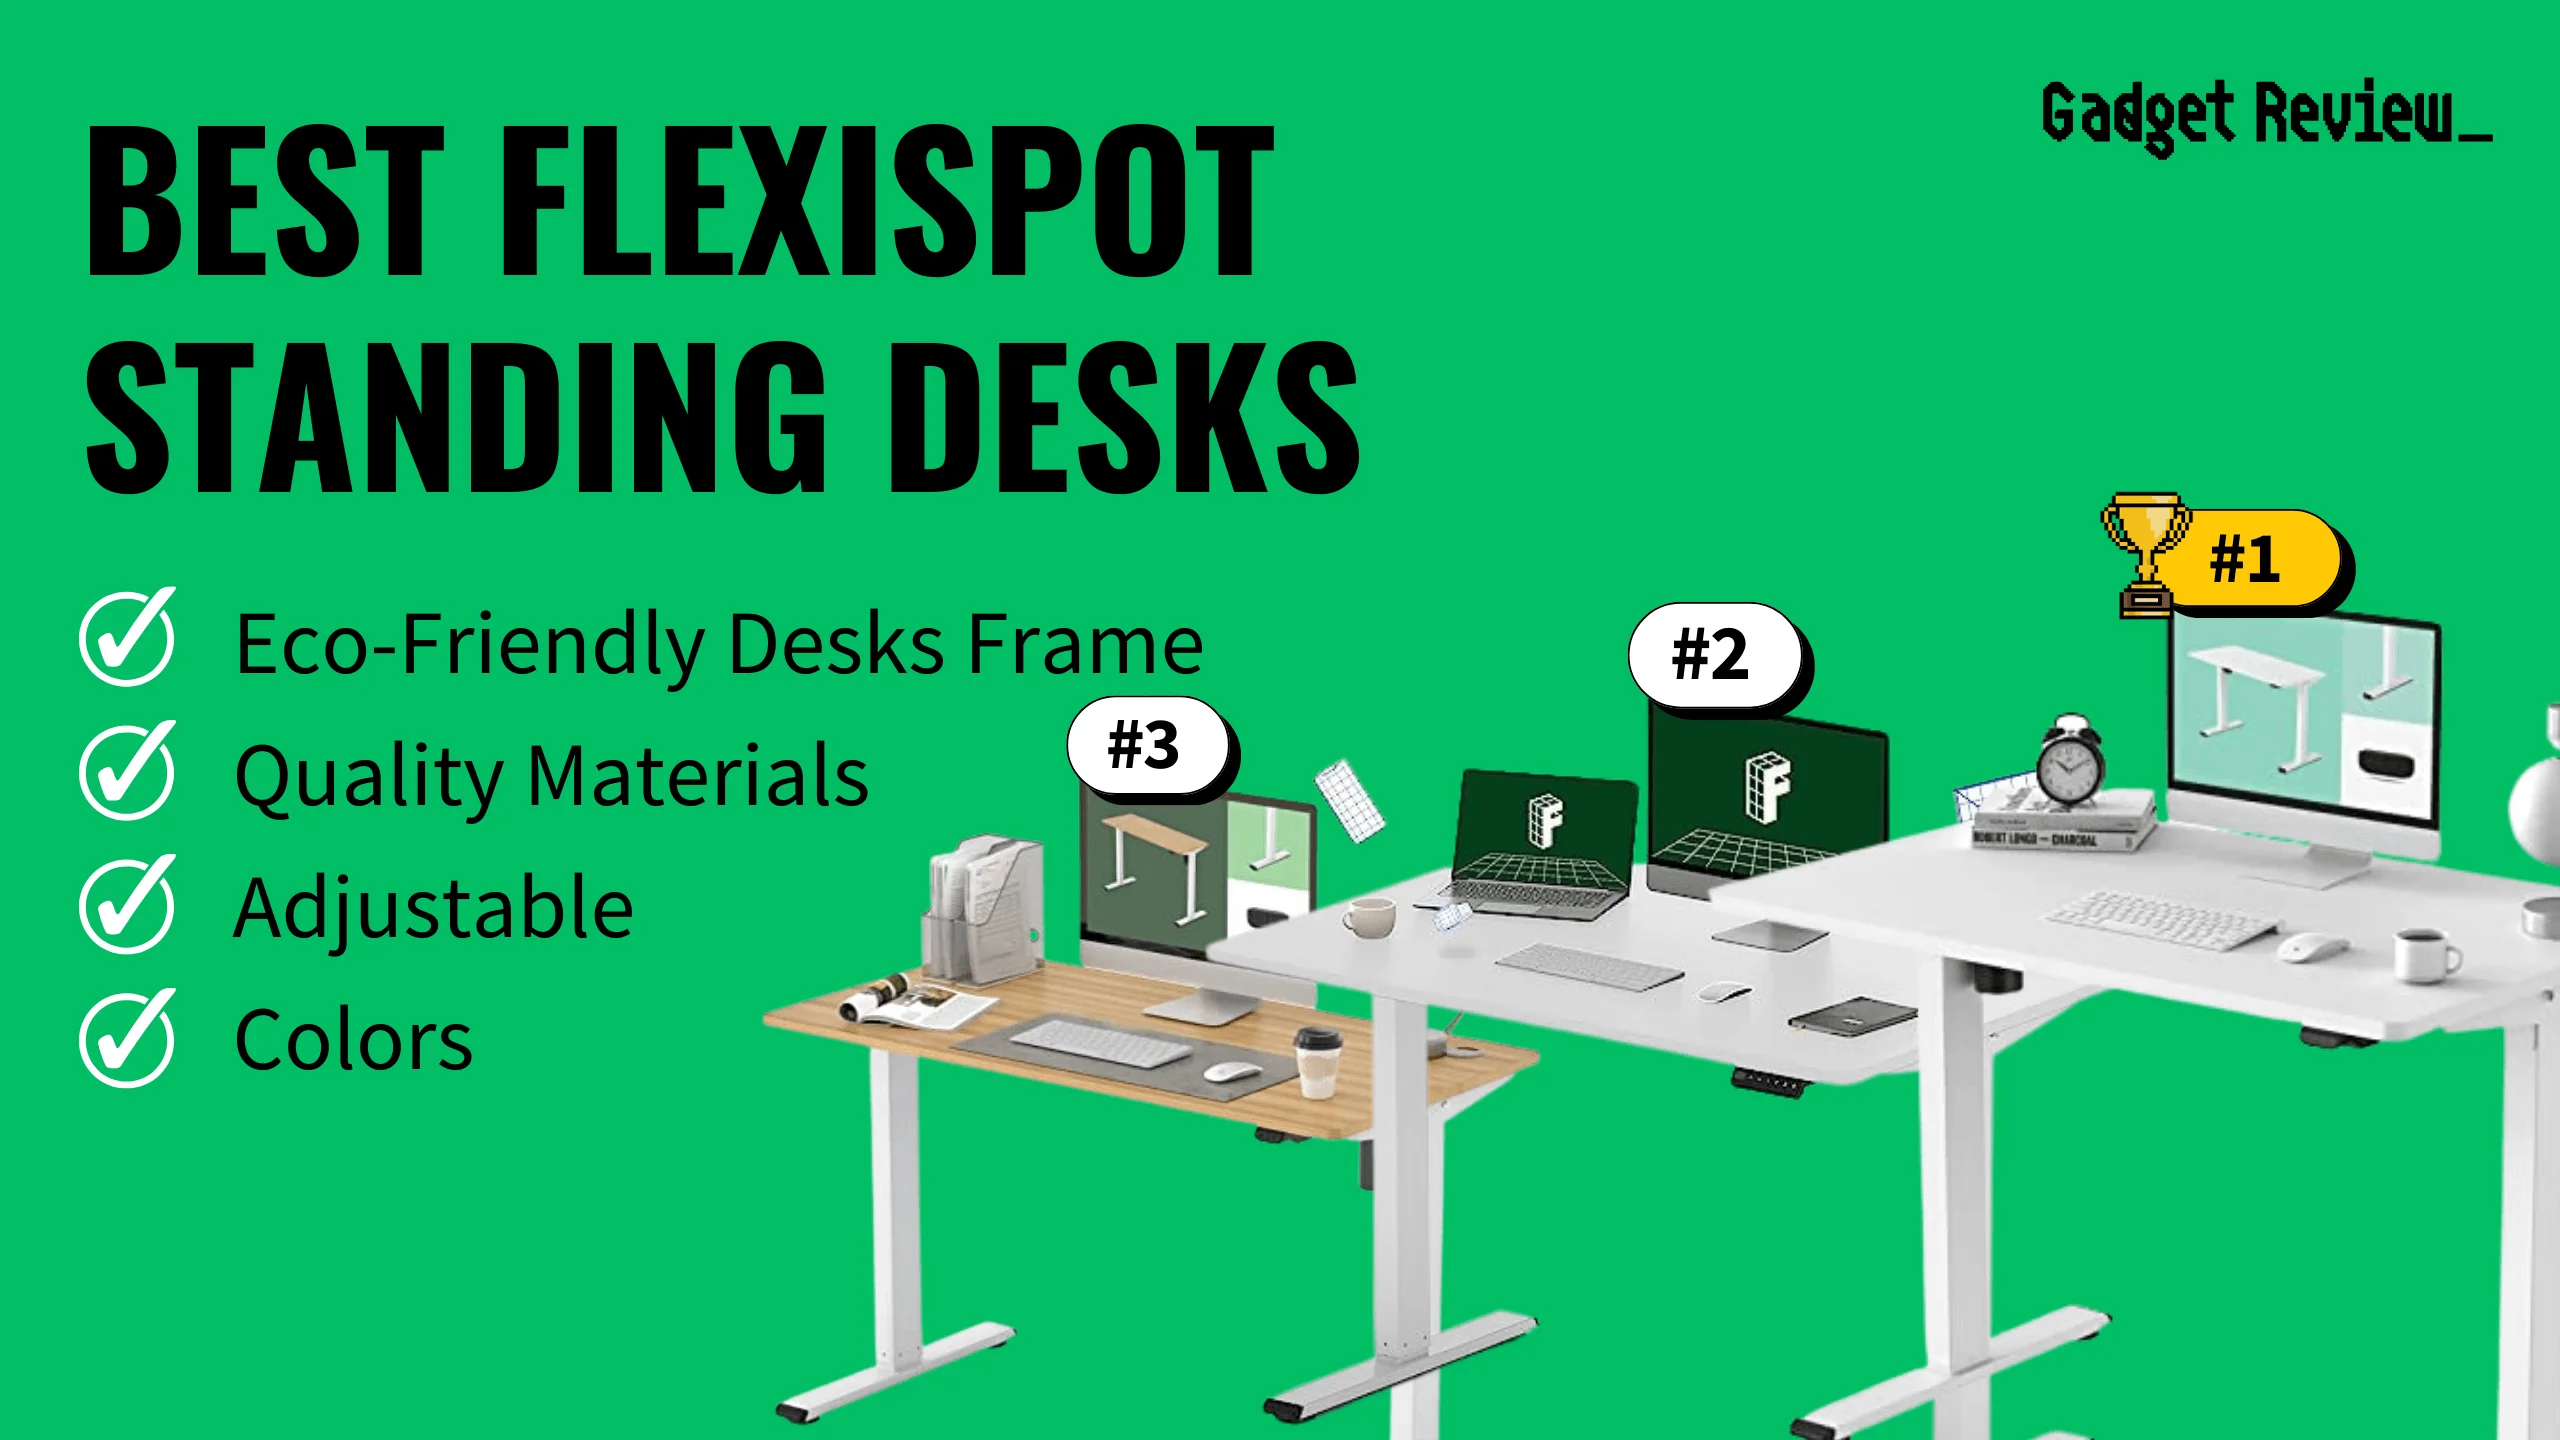 Best Flexispot Standing Desks